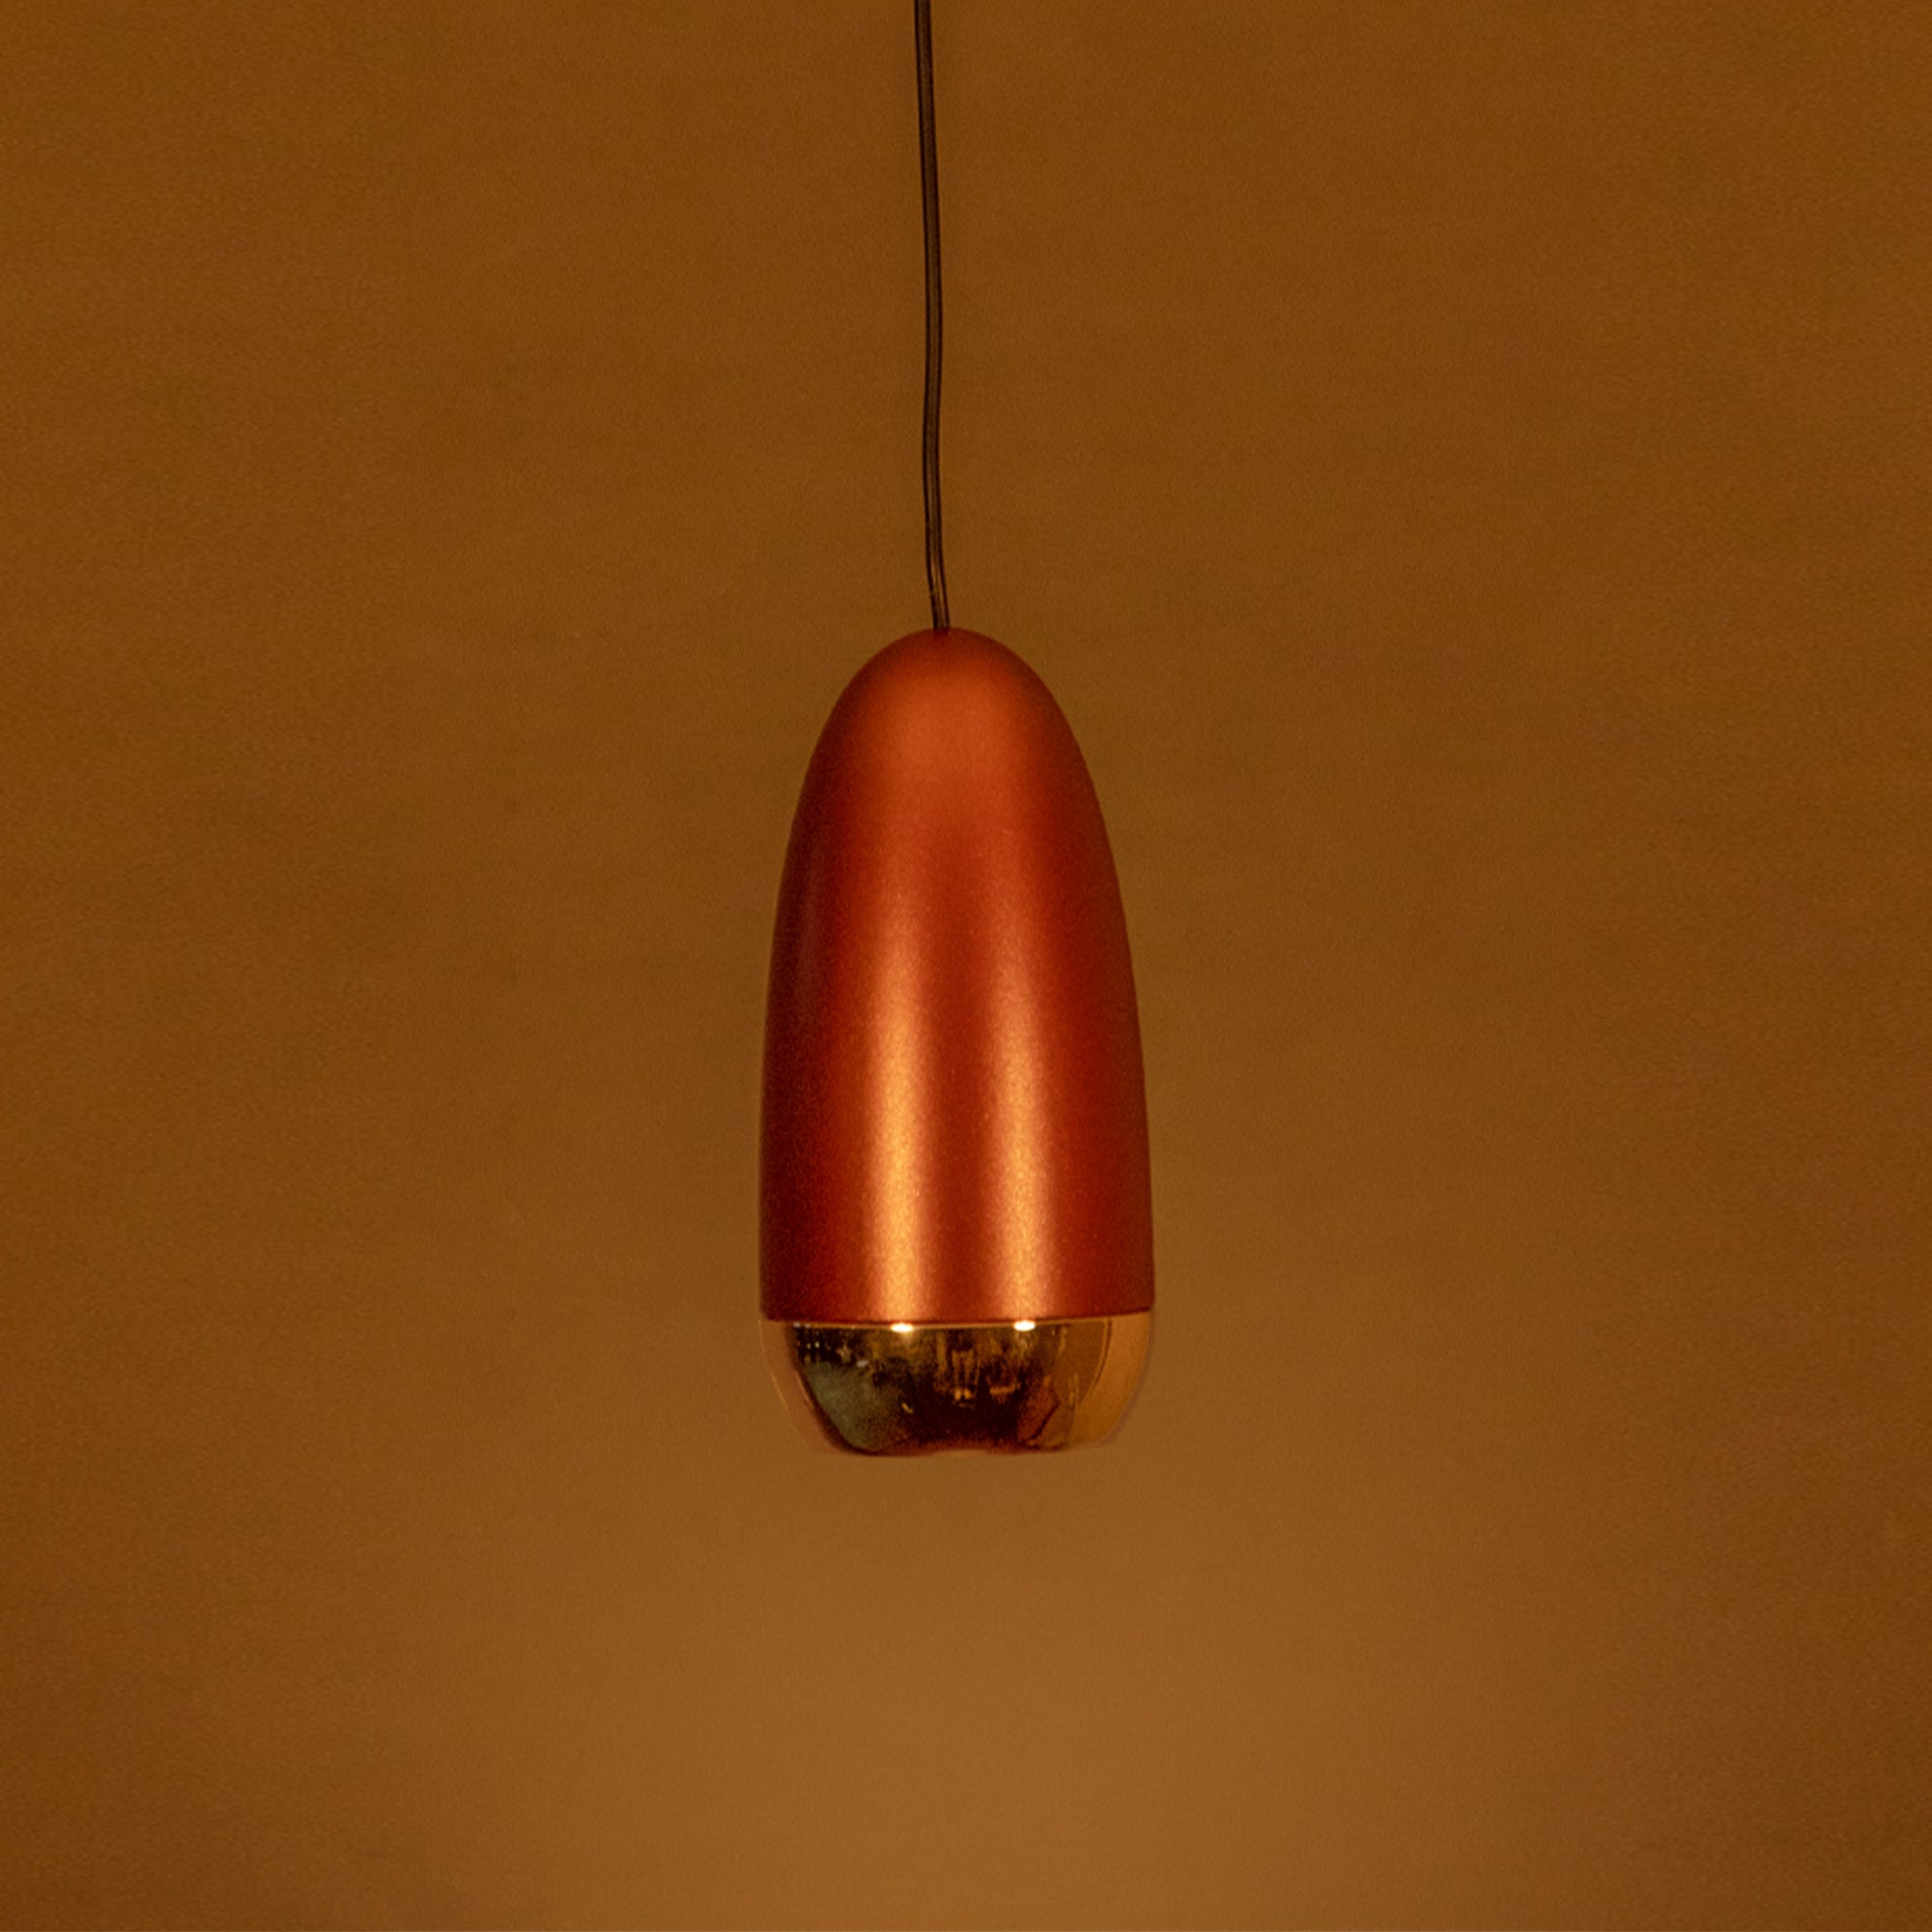 Shop Rome Sand Brown LED Pendant Light online